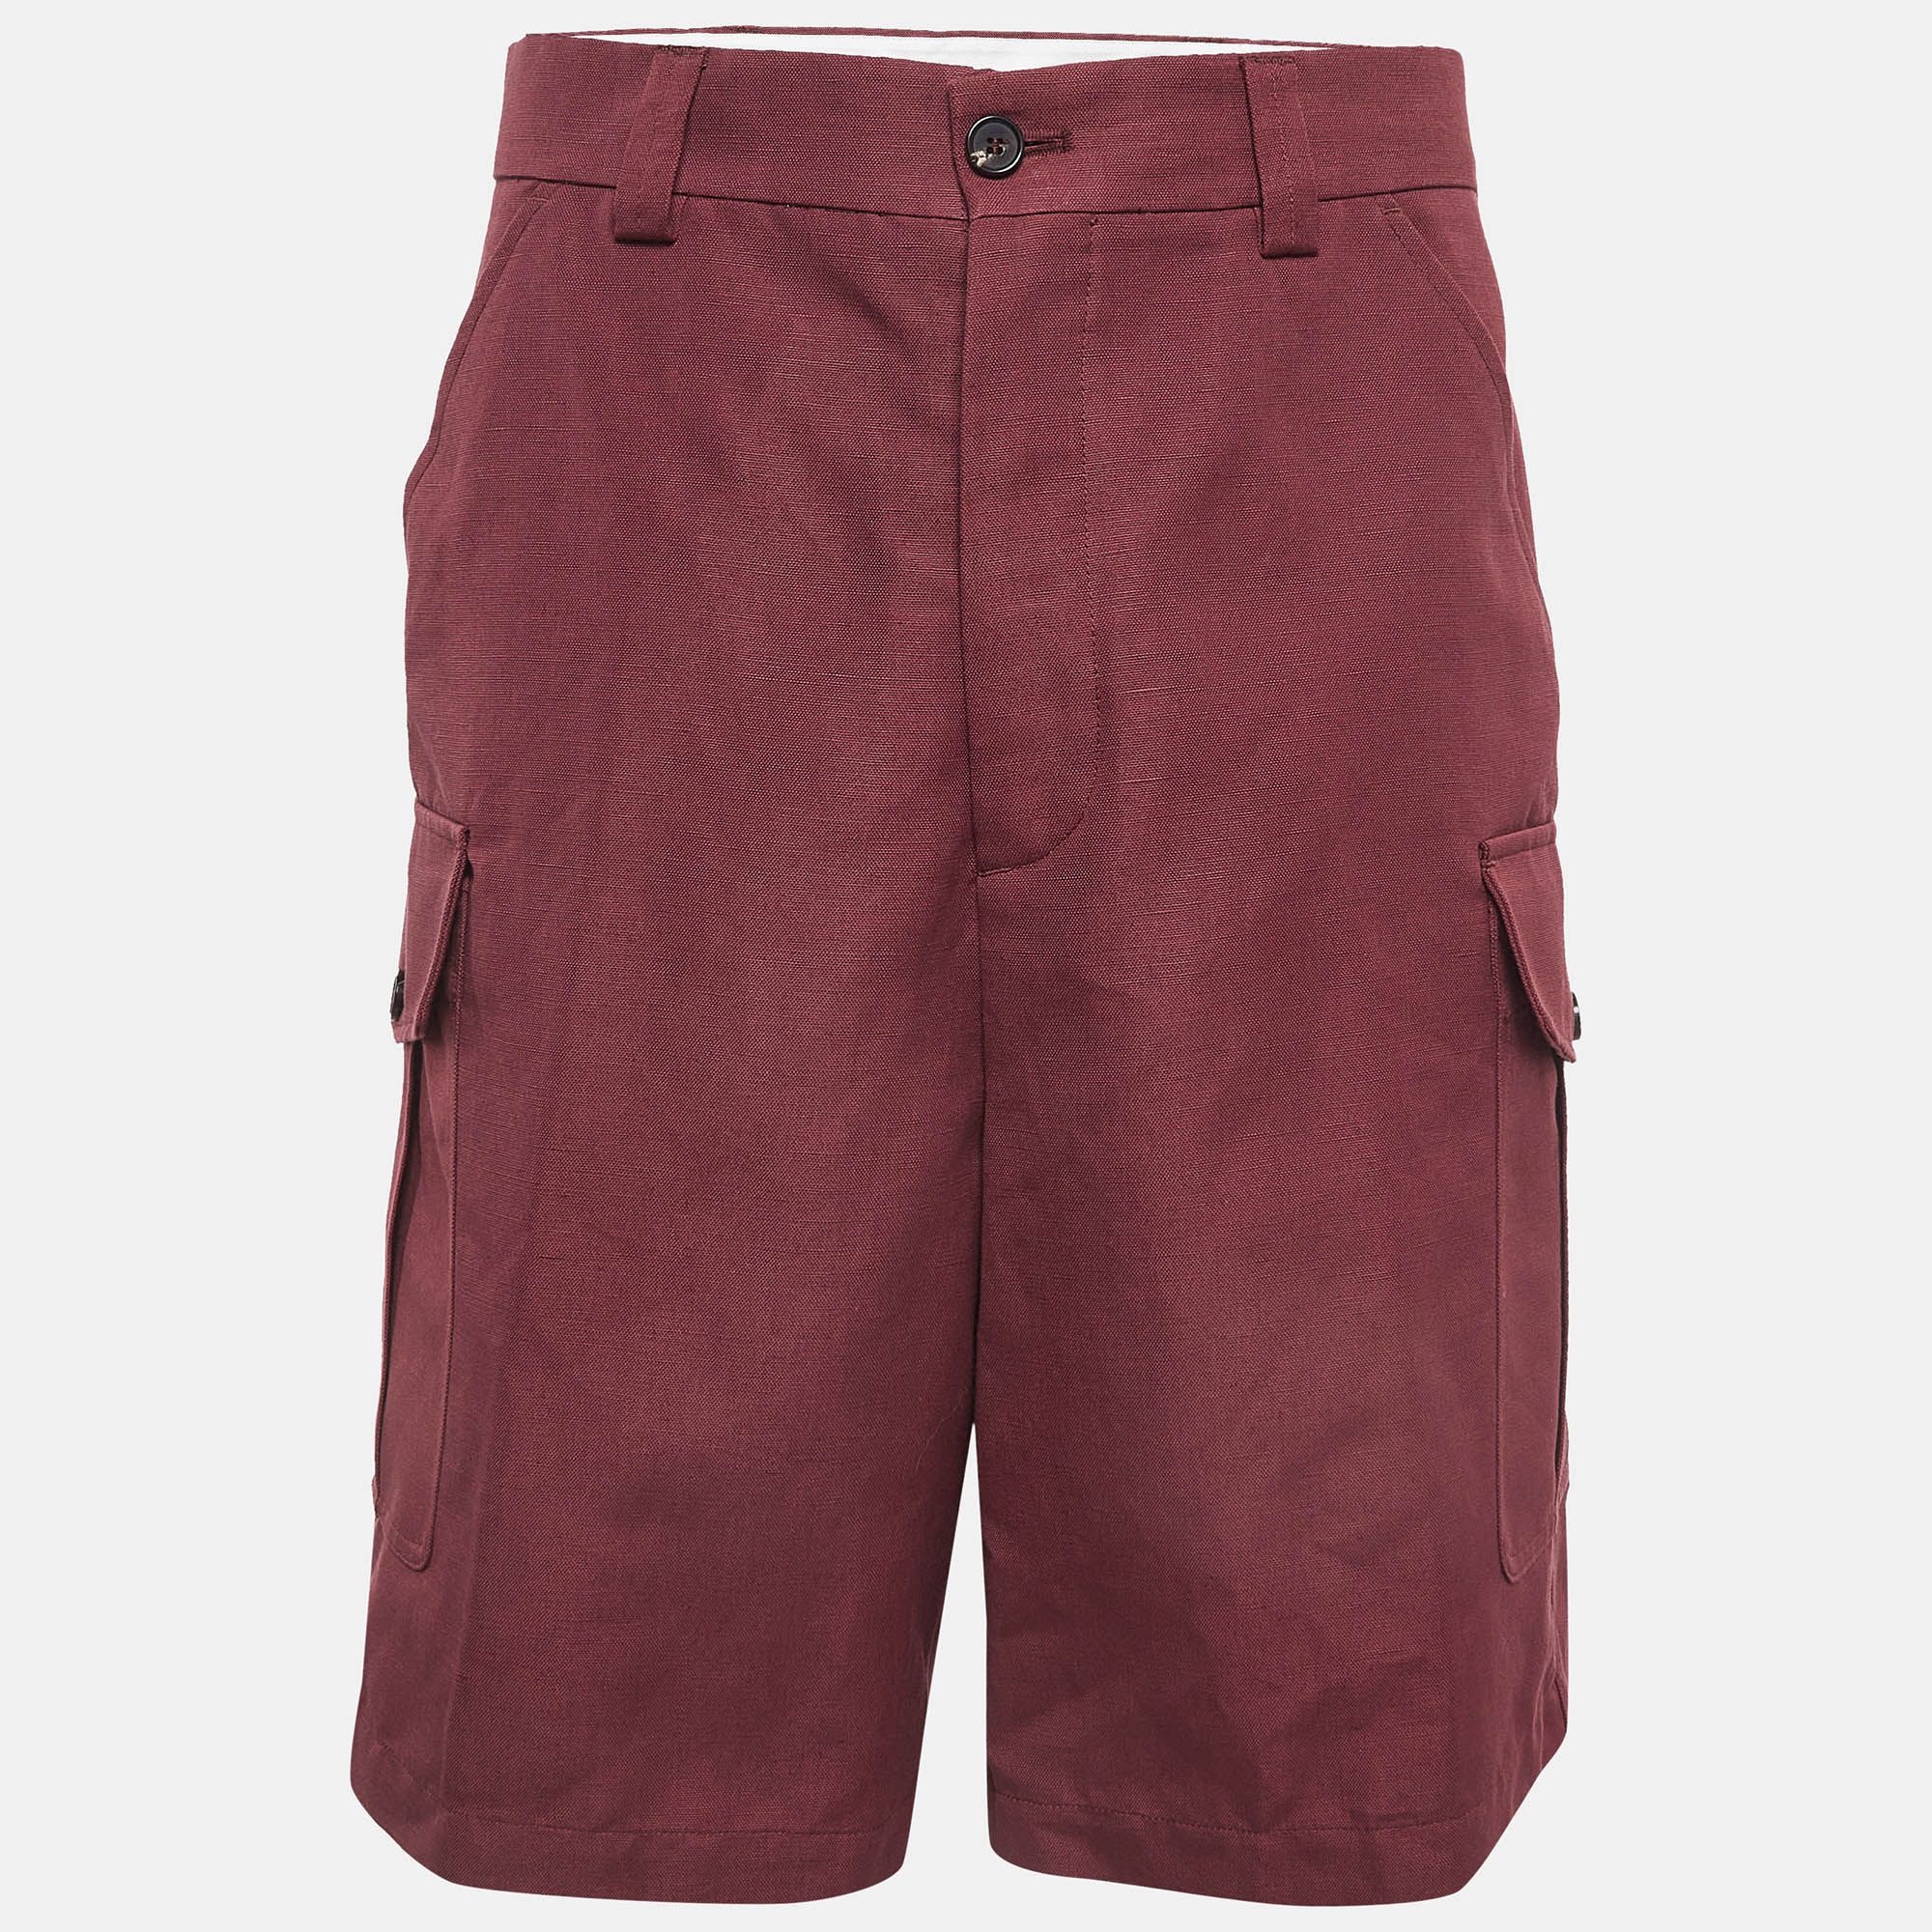 Loro piana red cotton & linen cargo shorts 2xl